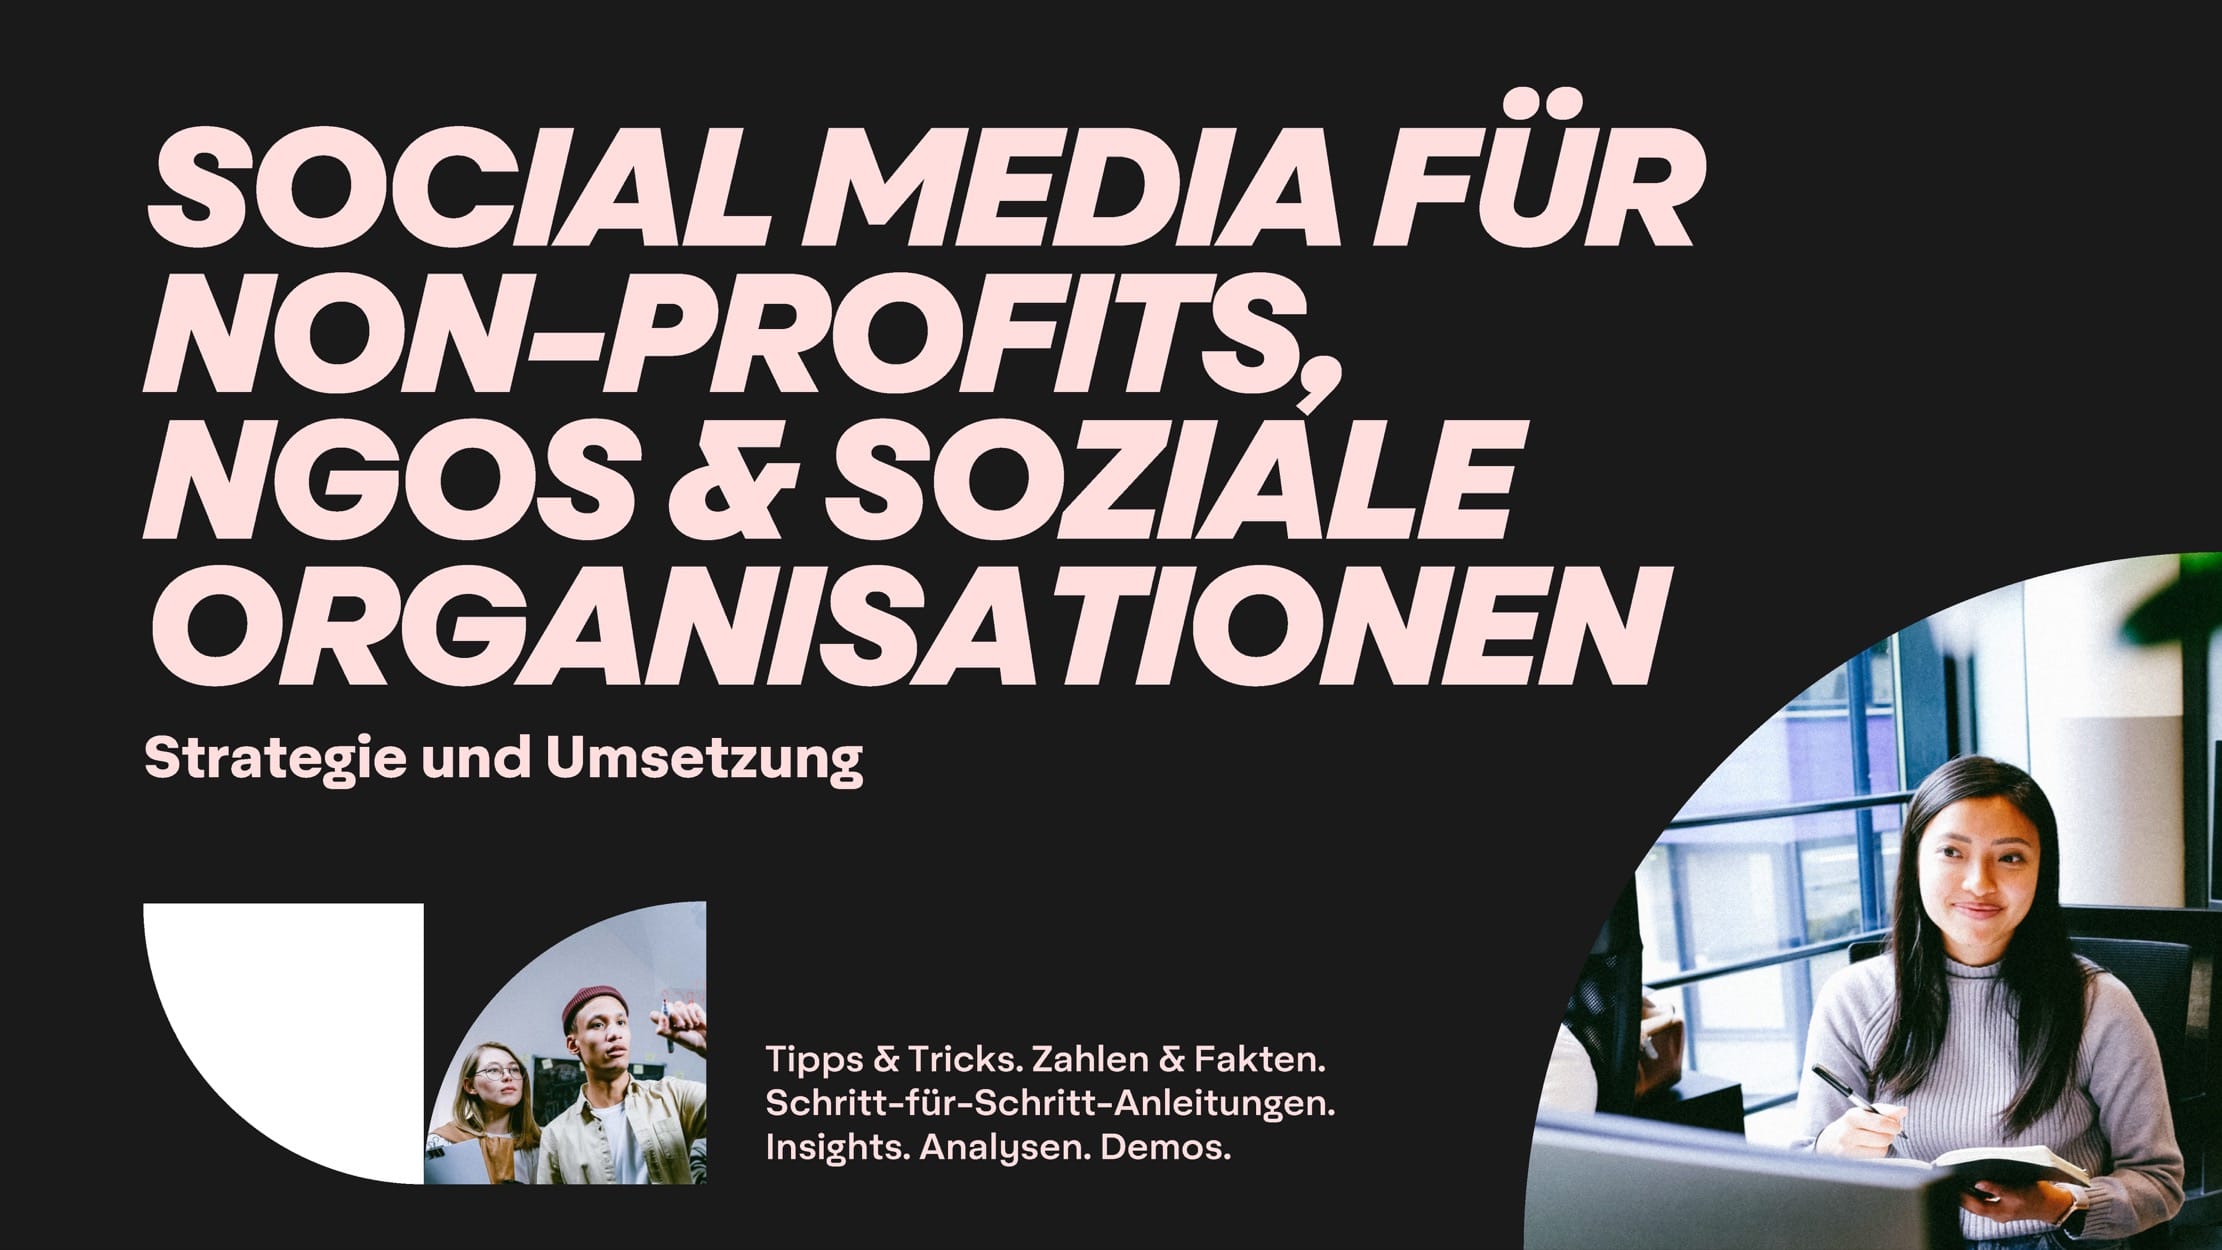 Whitepaper: Social Media für Non-Profits, NGOs & soziale Organisationen